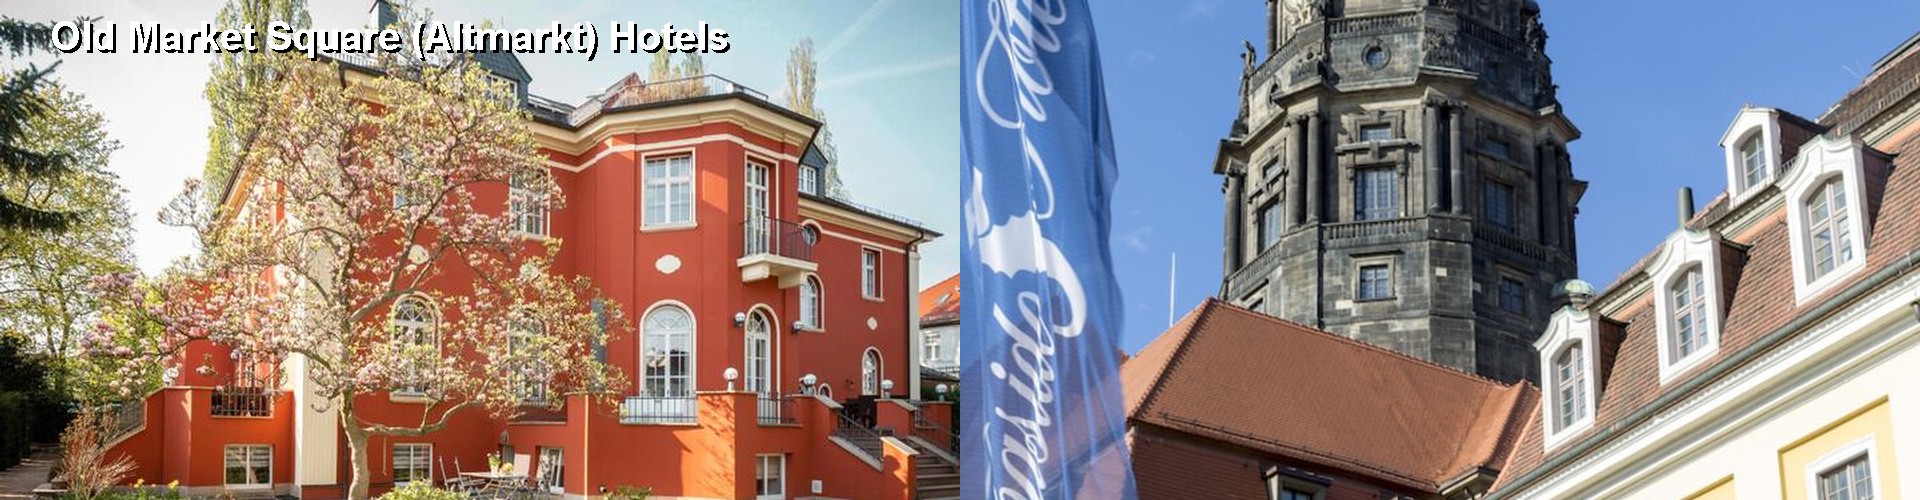 5 Best Hotels near Old Market Square (Altmarkt)